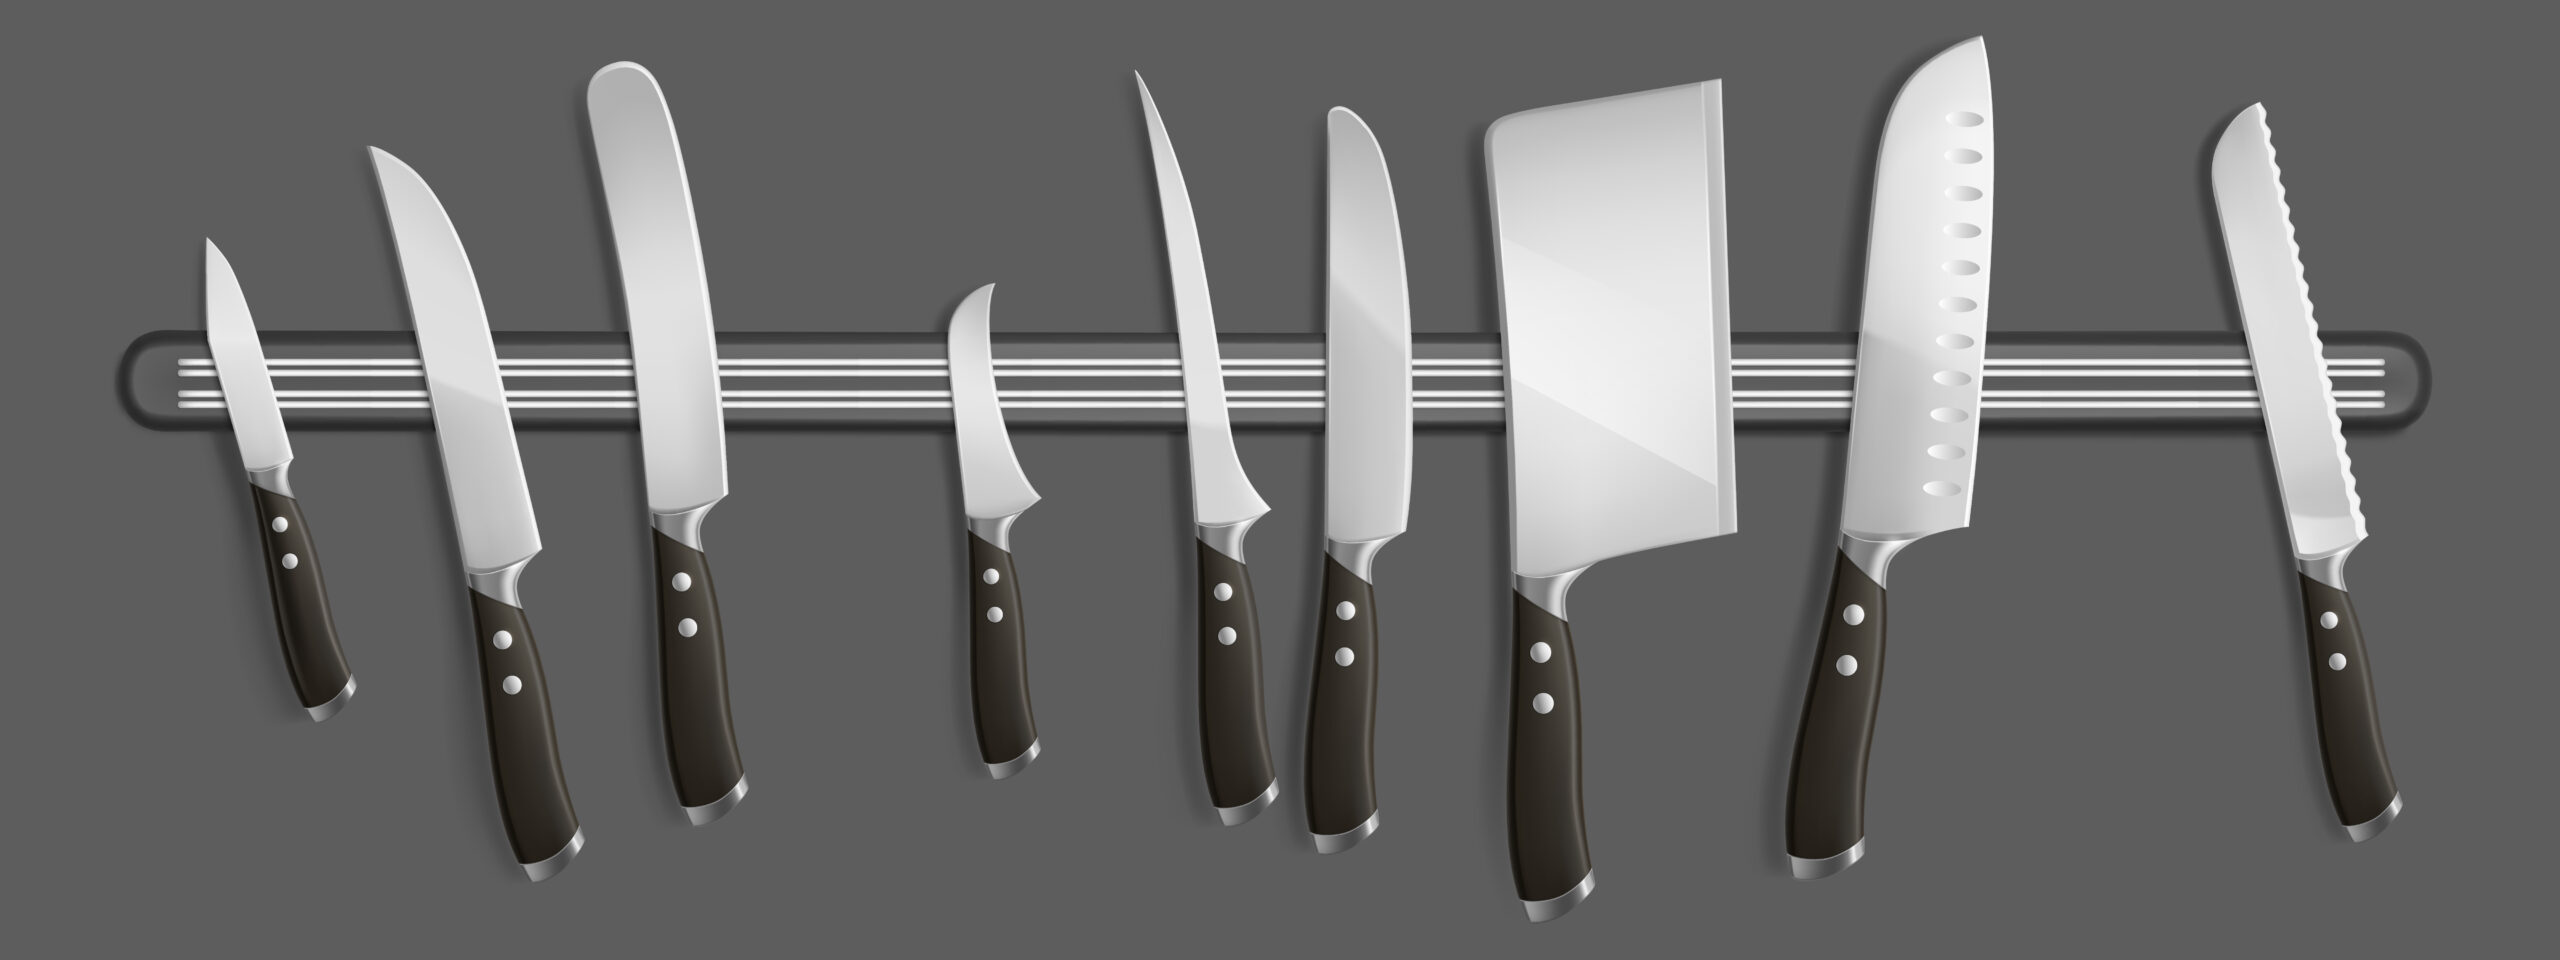 Best kitchen knife set